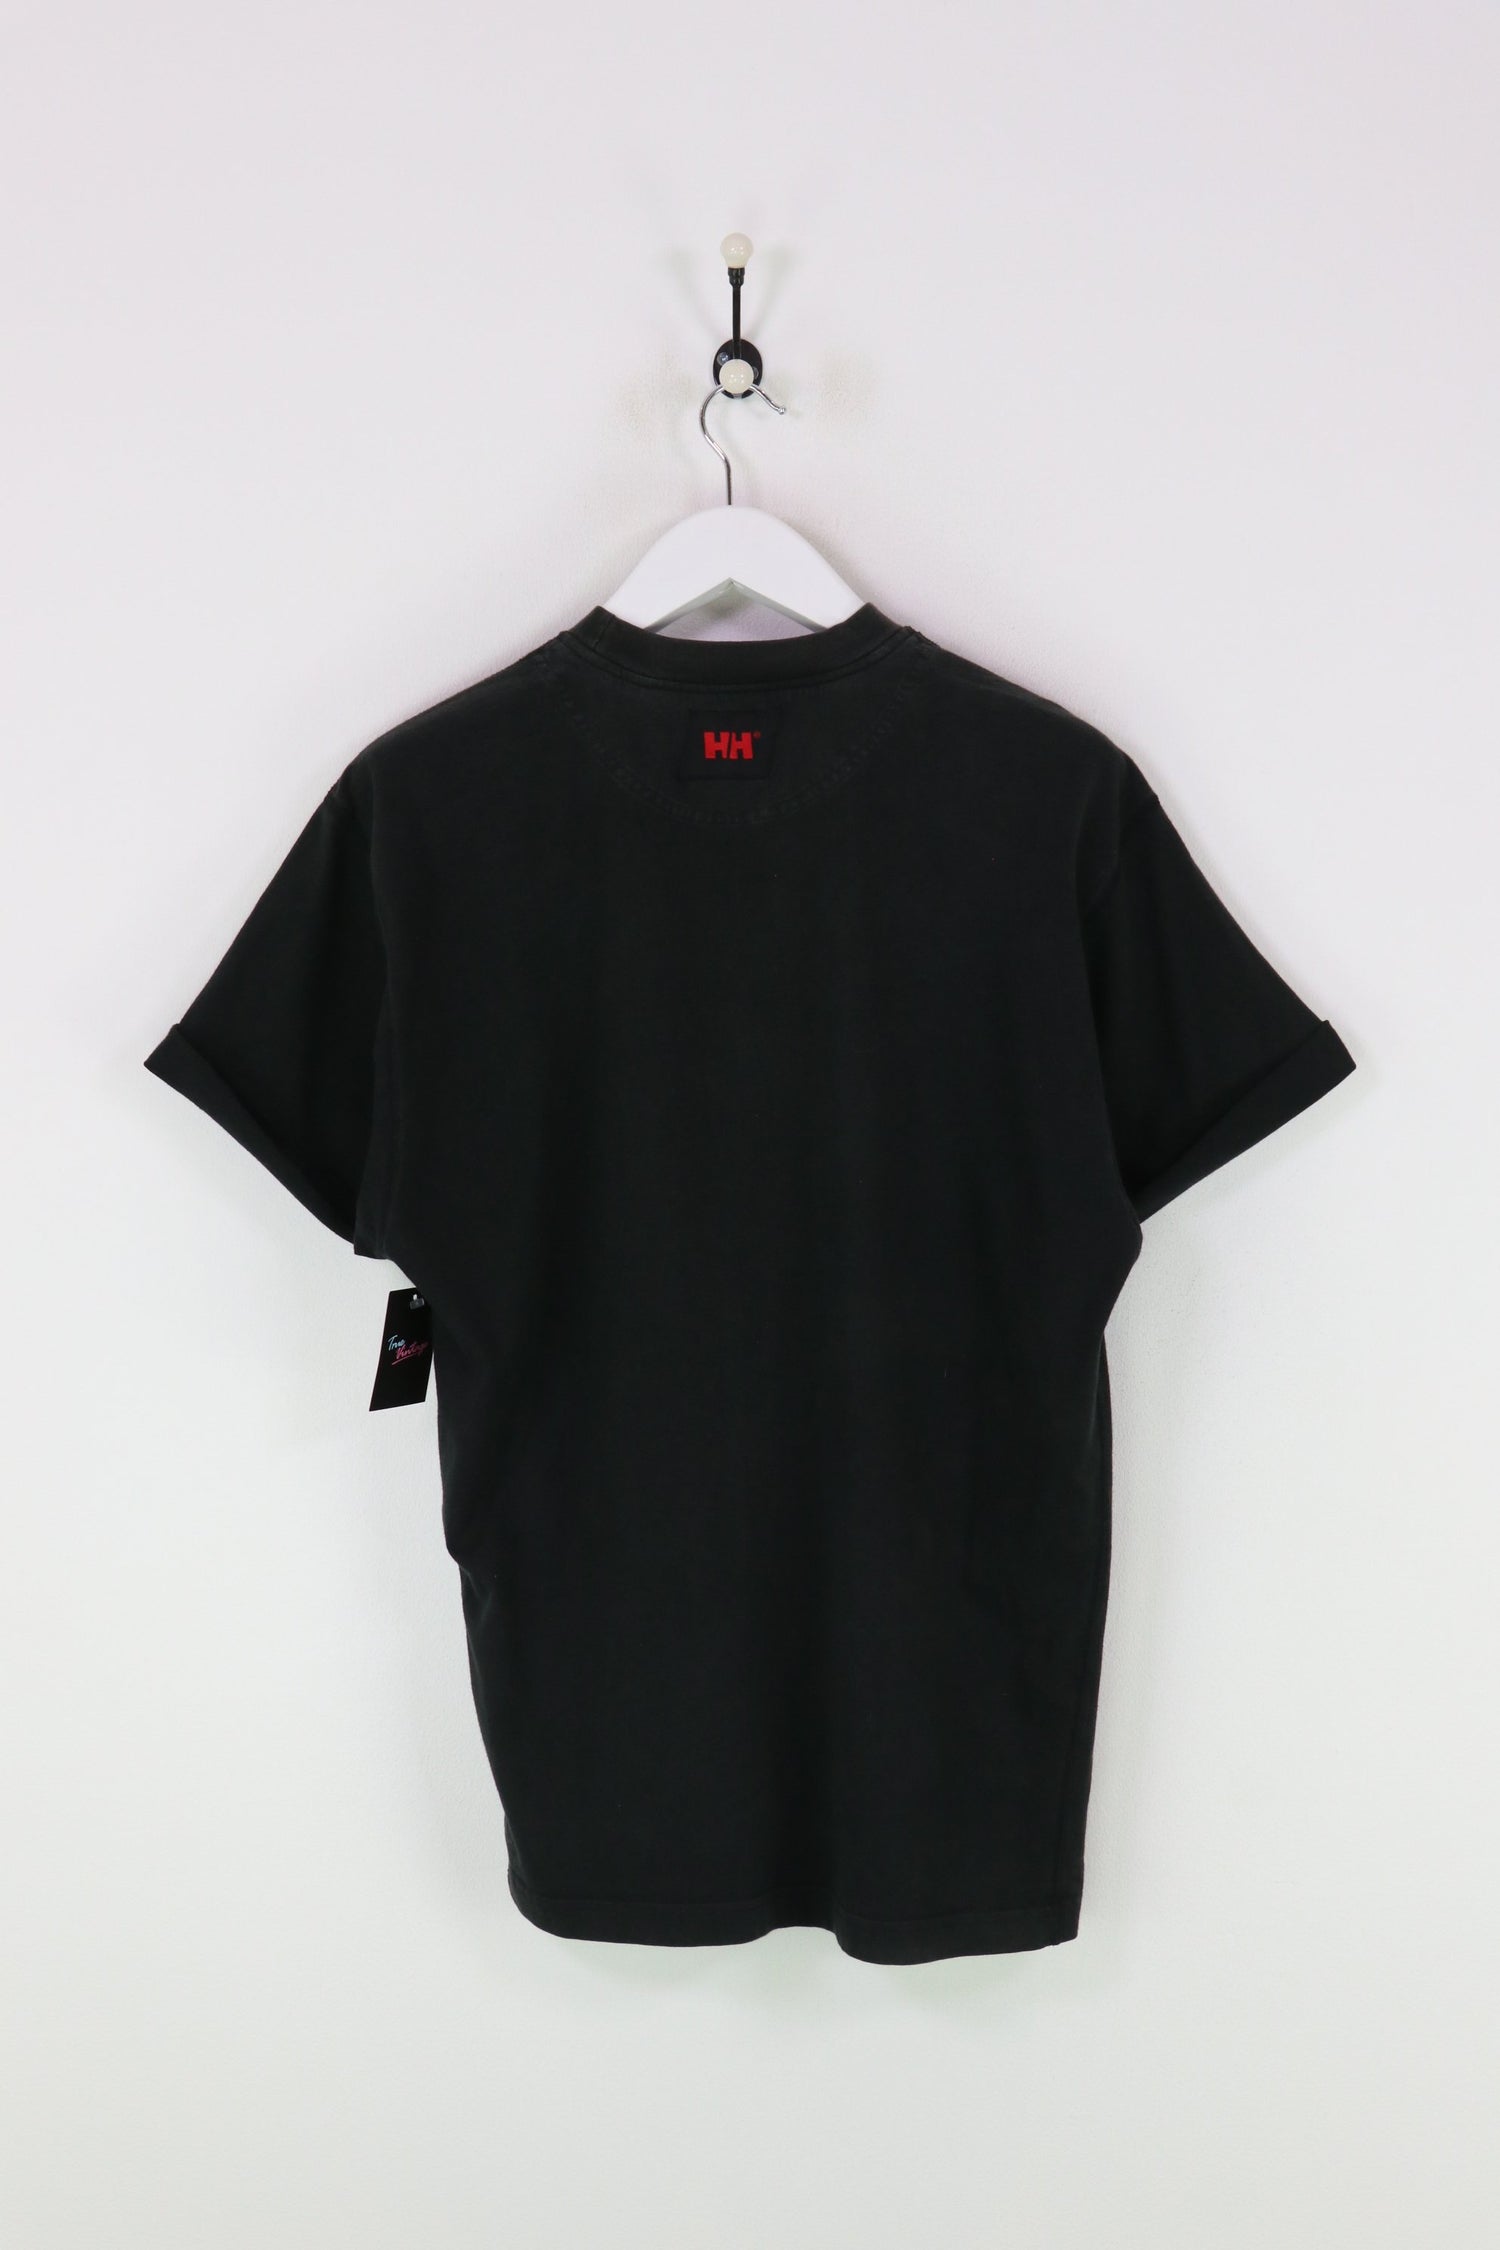 Helly Hansen T-shirt Black Large